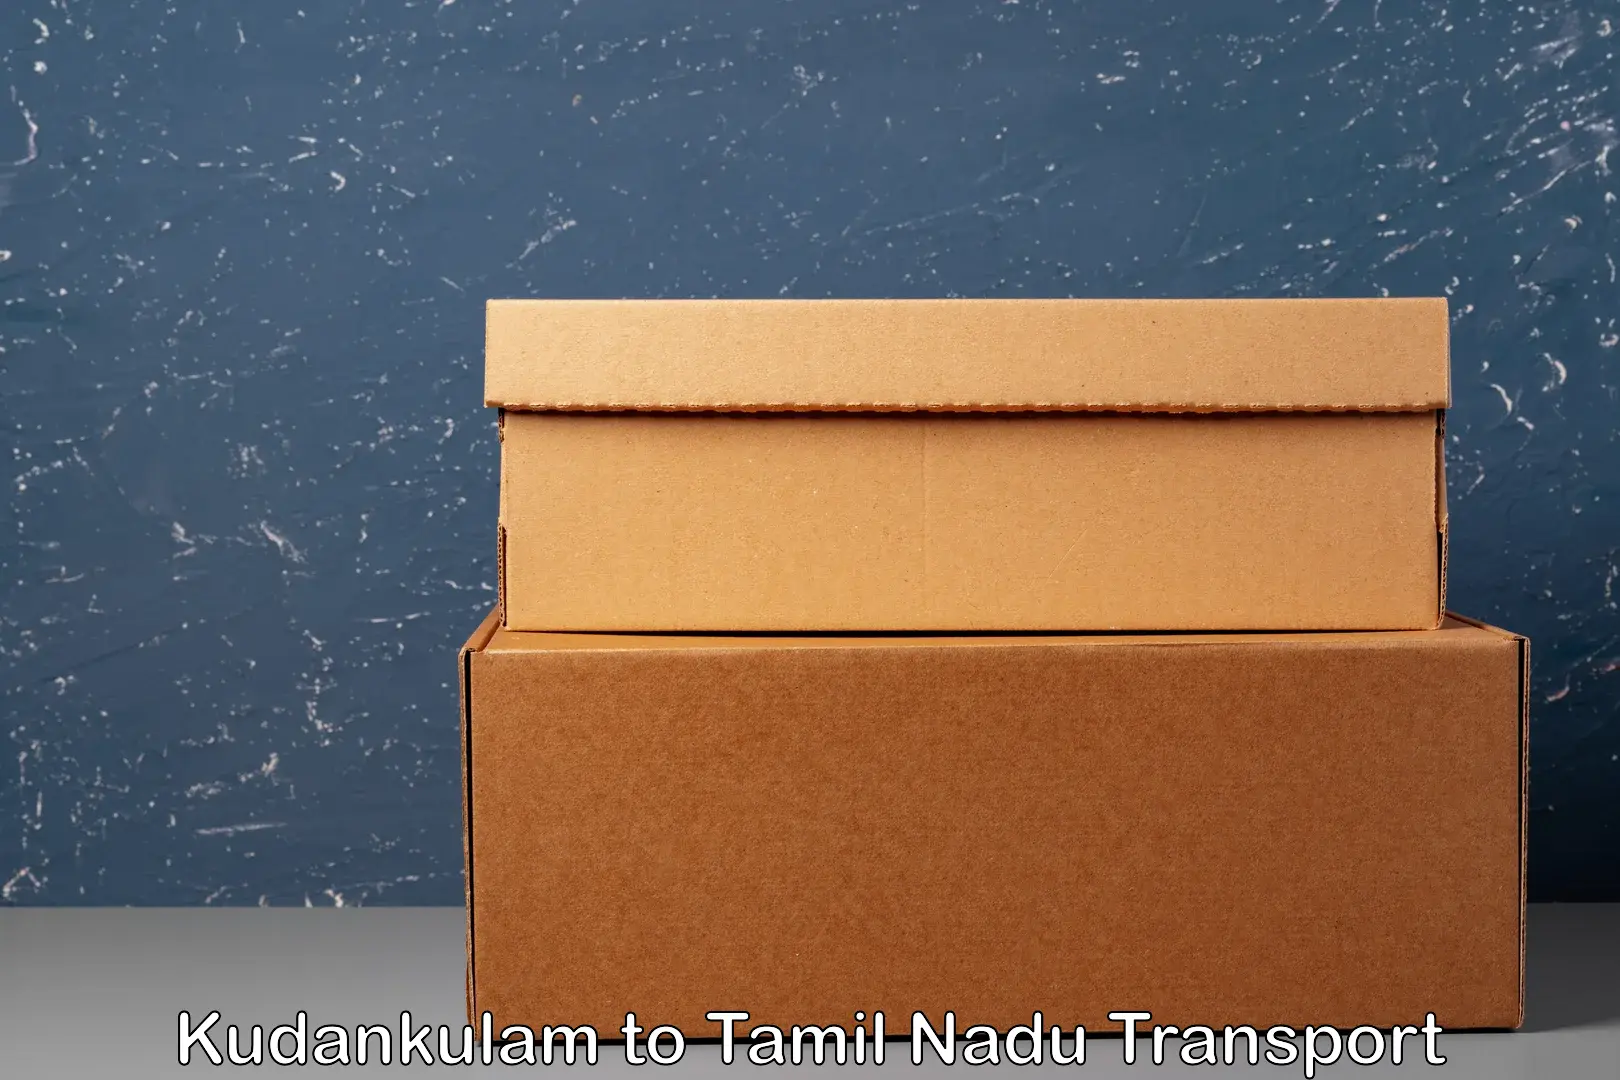 Transport in sharing in Kudankulam to Tamil Nadu